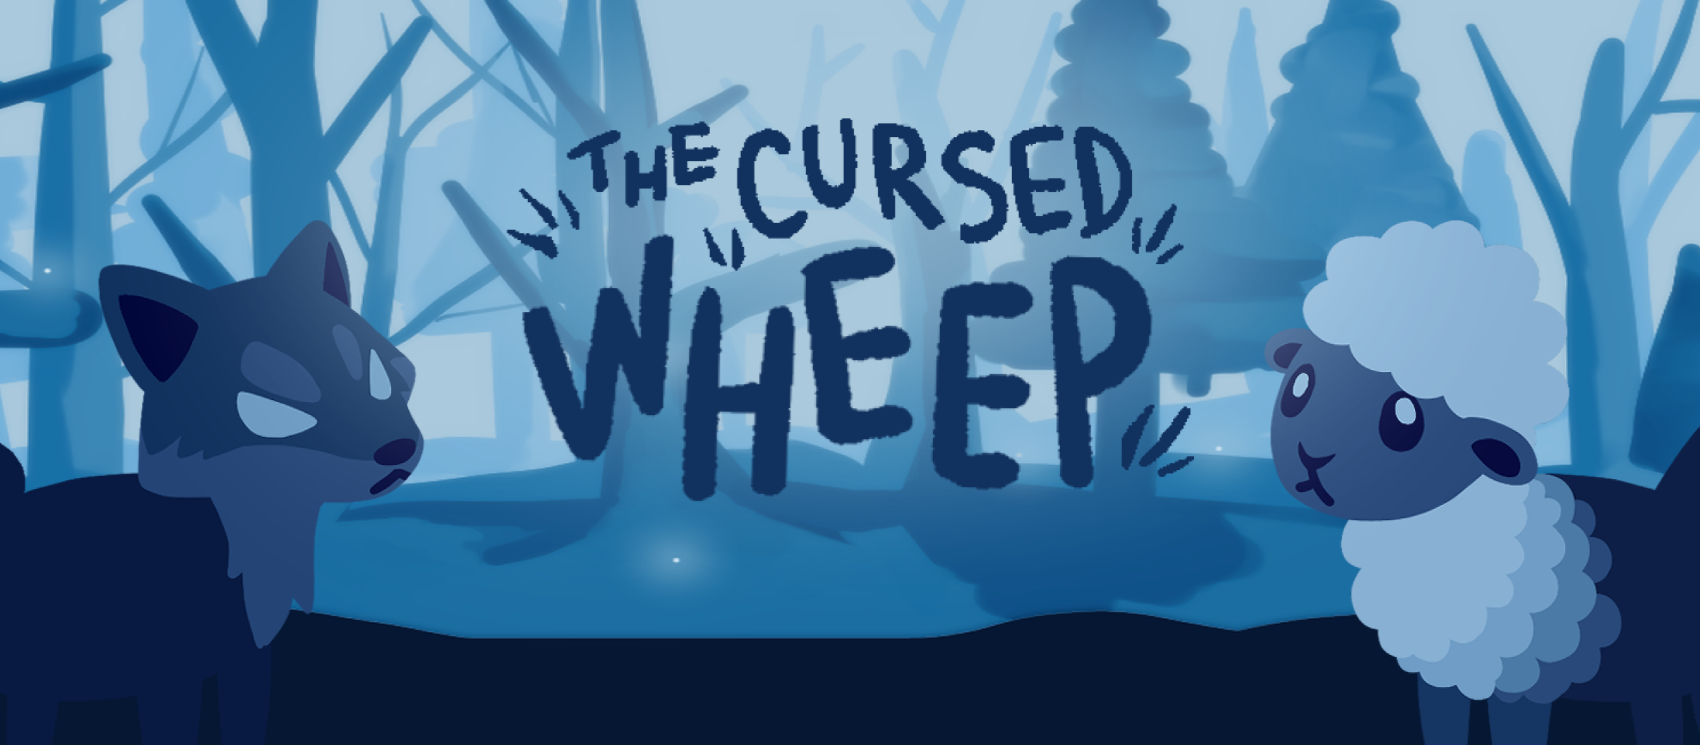 The Cursed Wheep